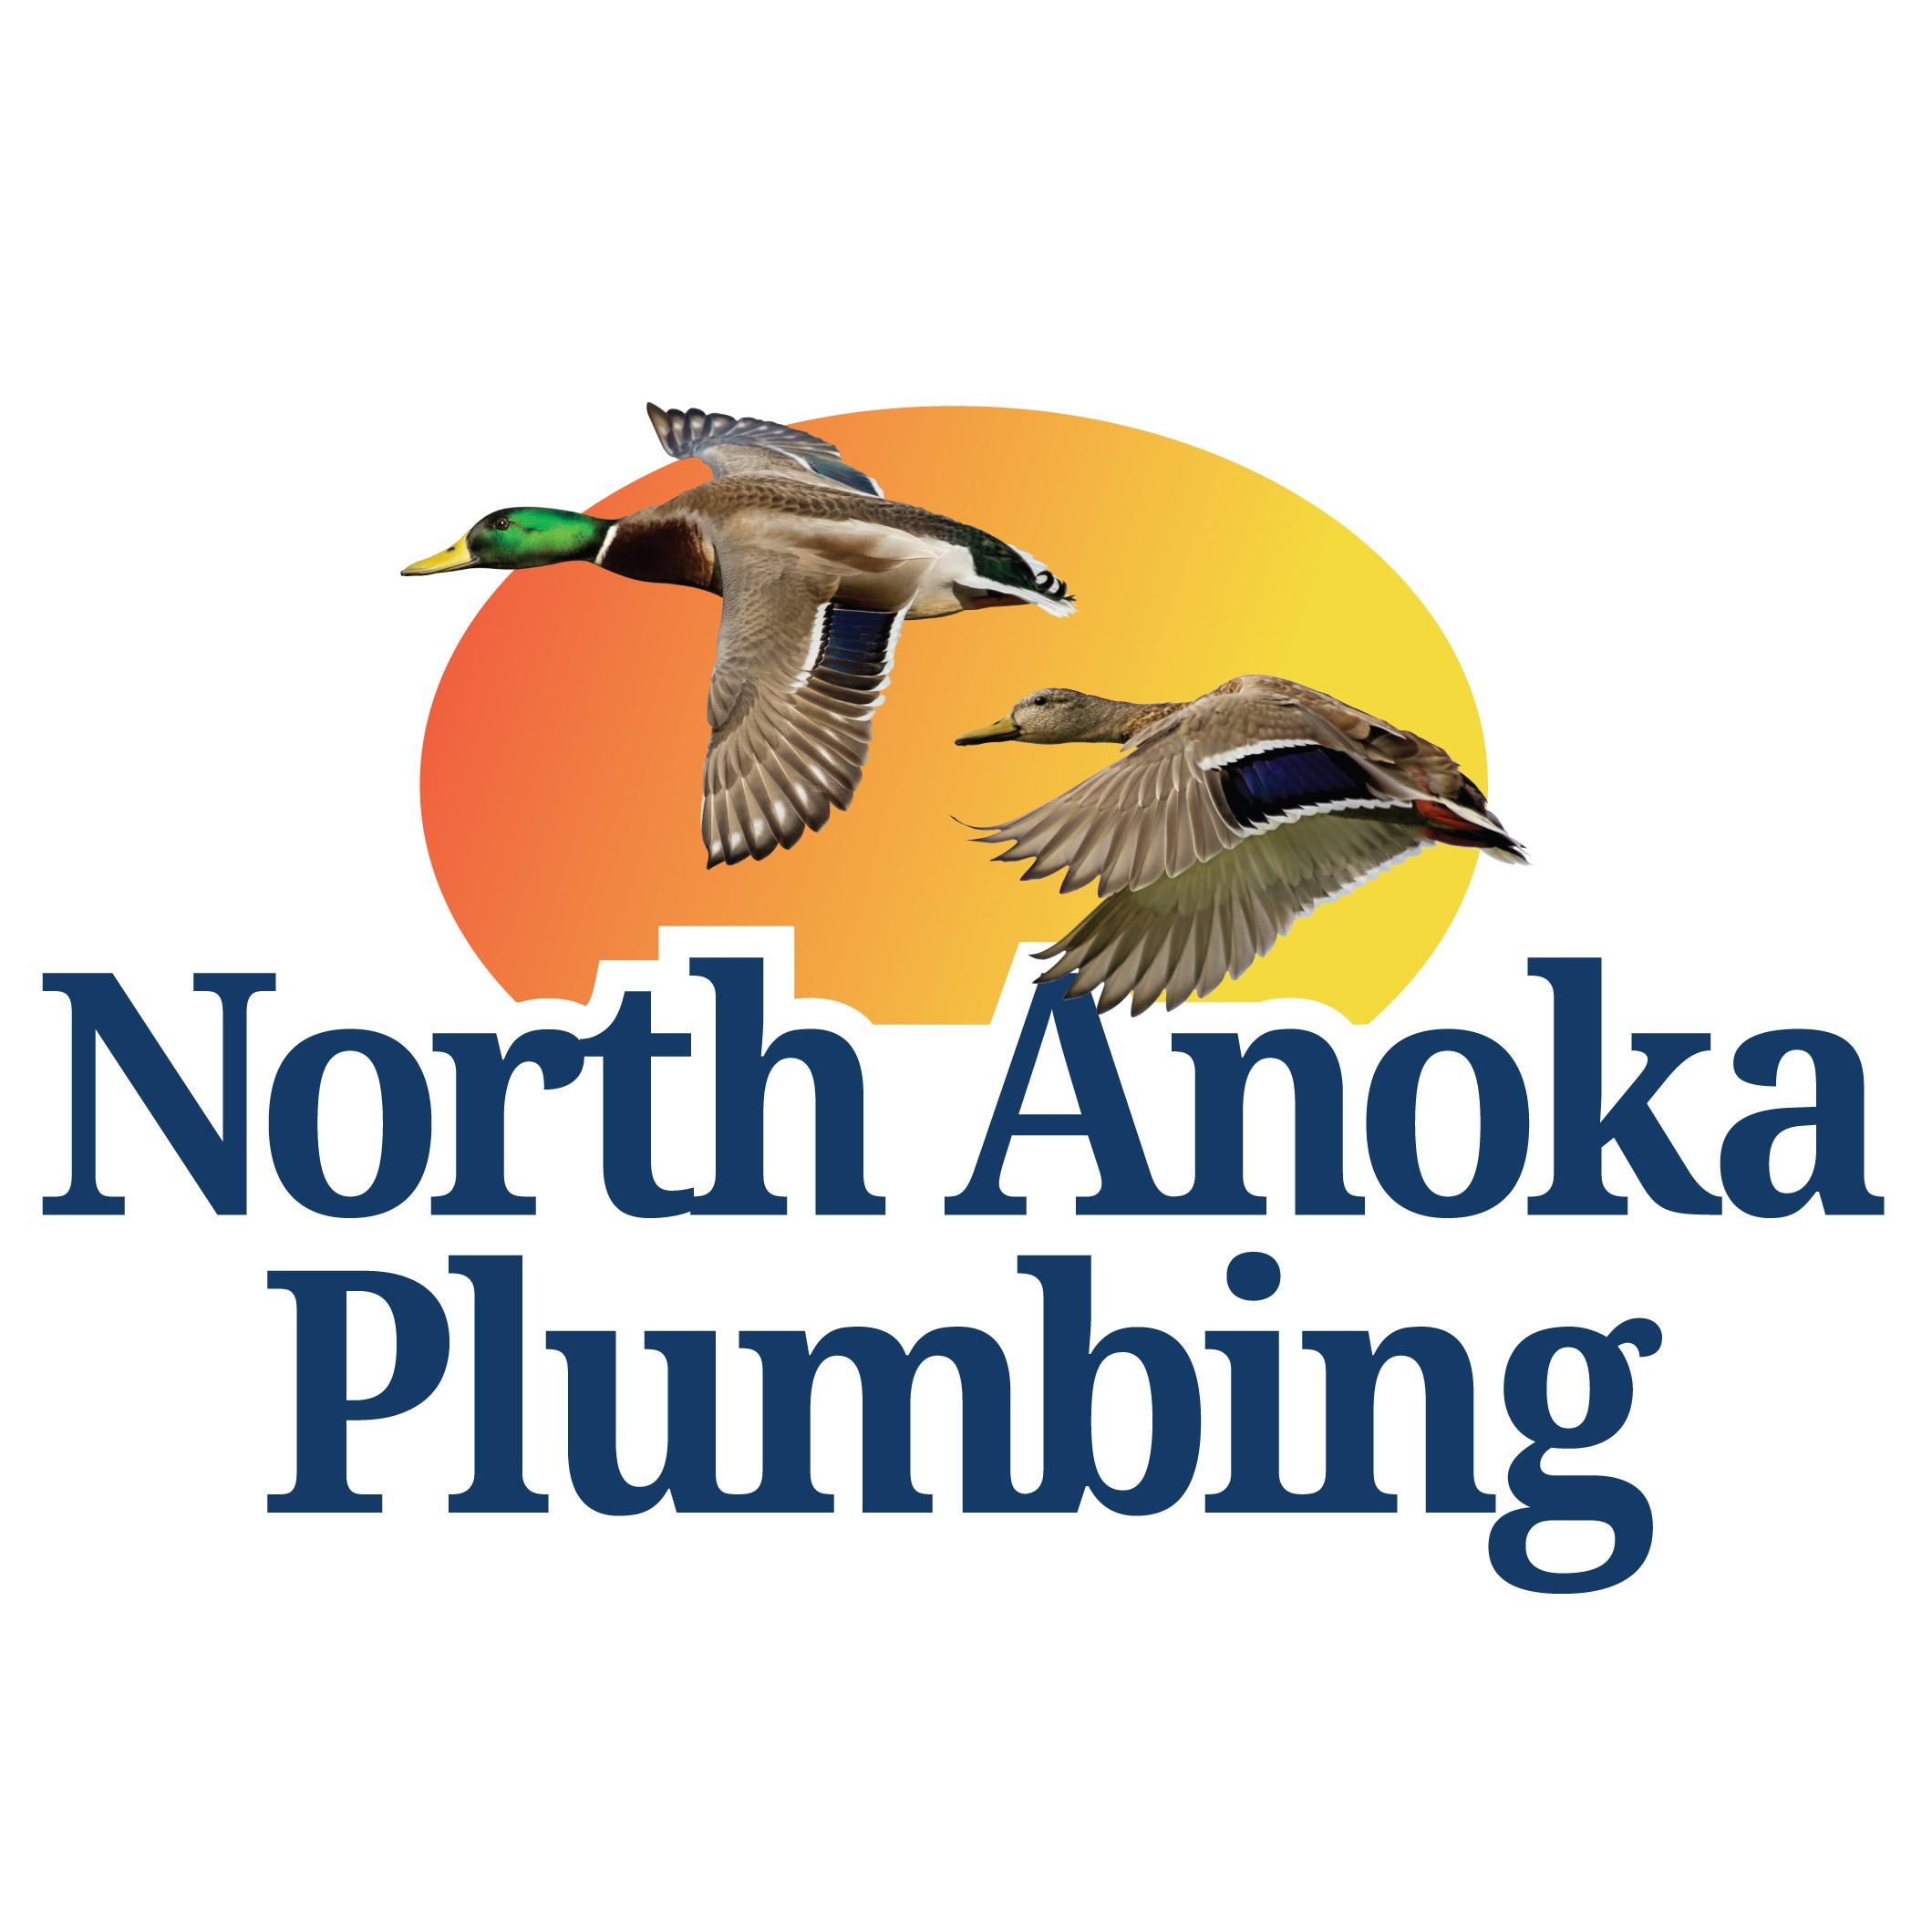 North Anoka Plumbing - St. Francis, MN 55070 - (763)753-3373 | ShowMeLocal.com